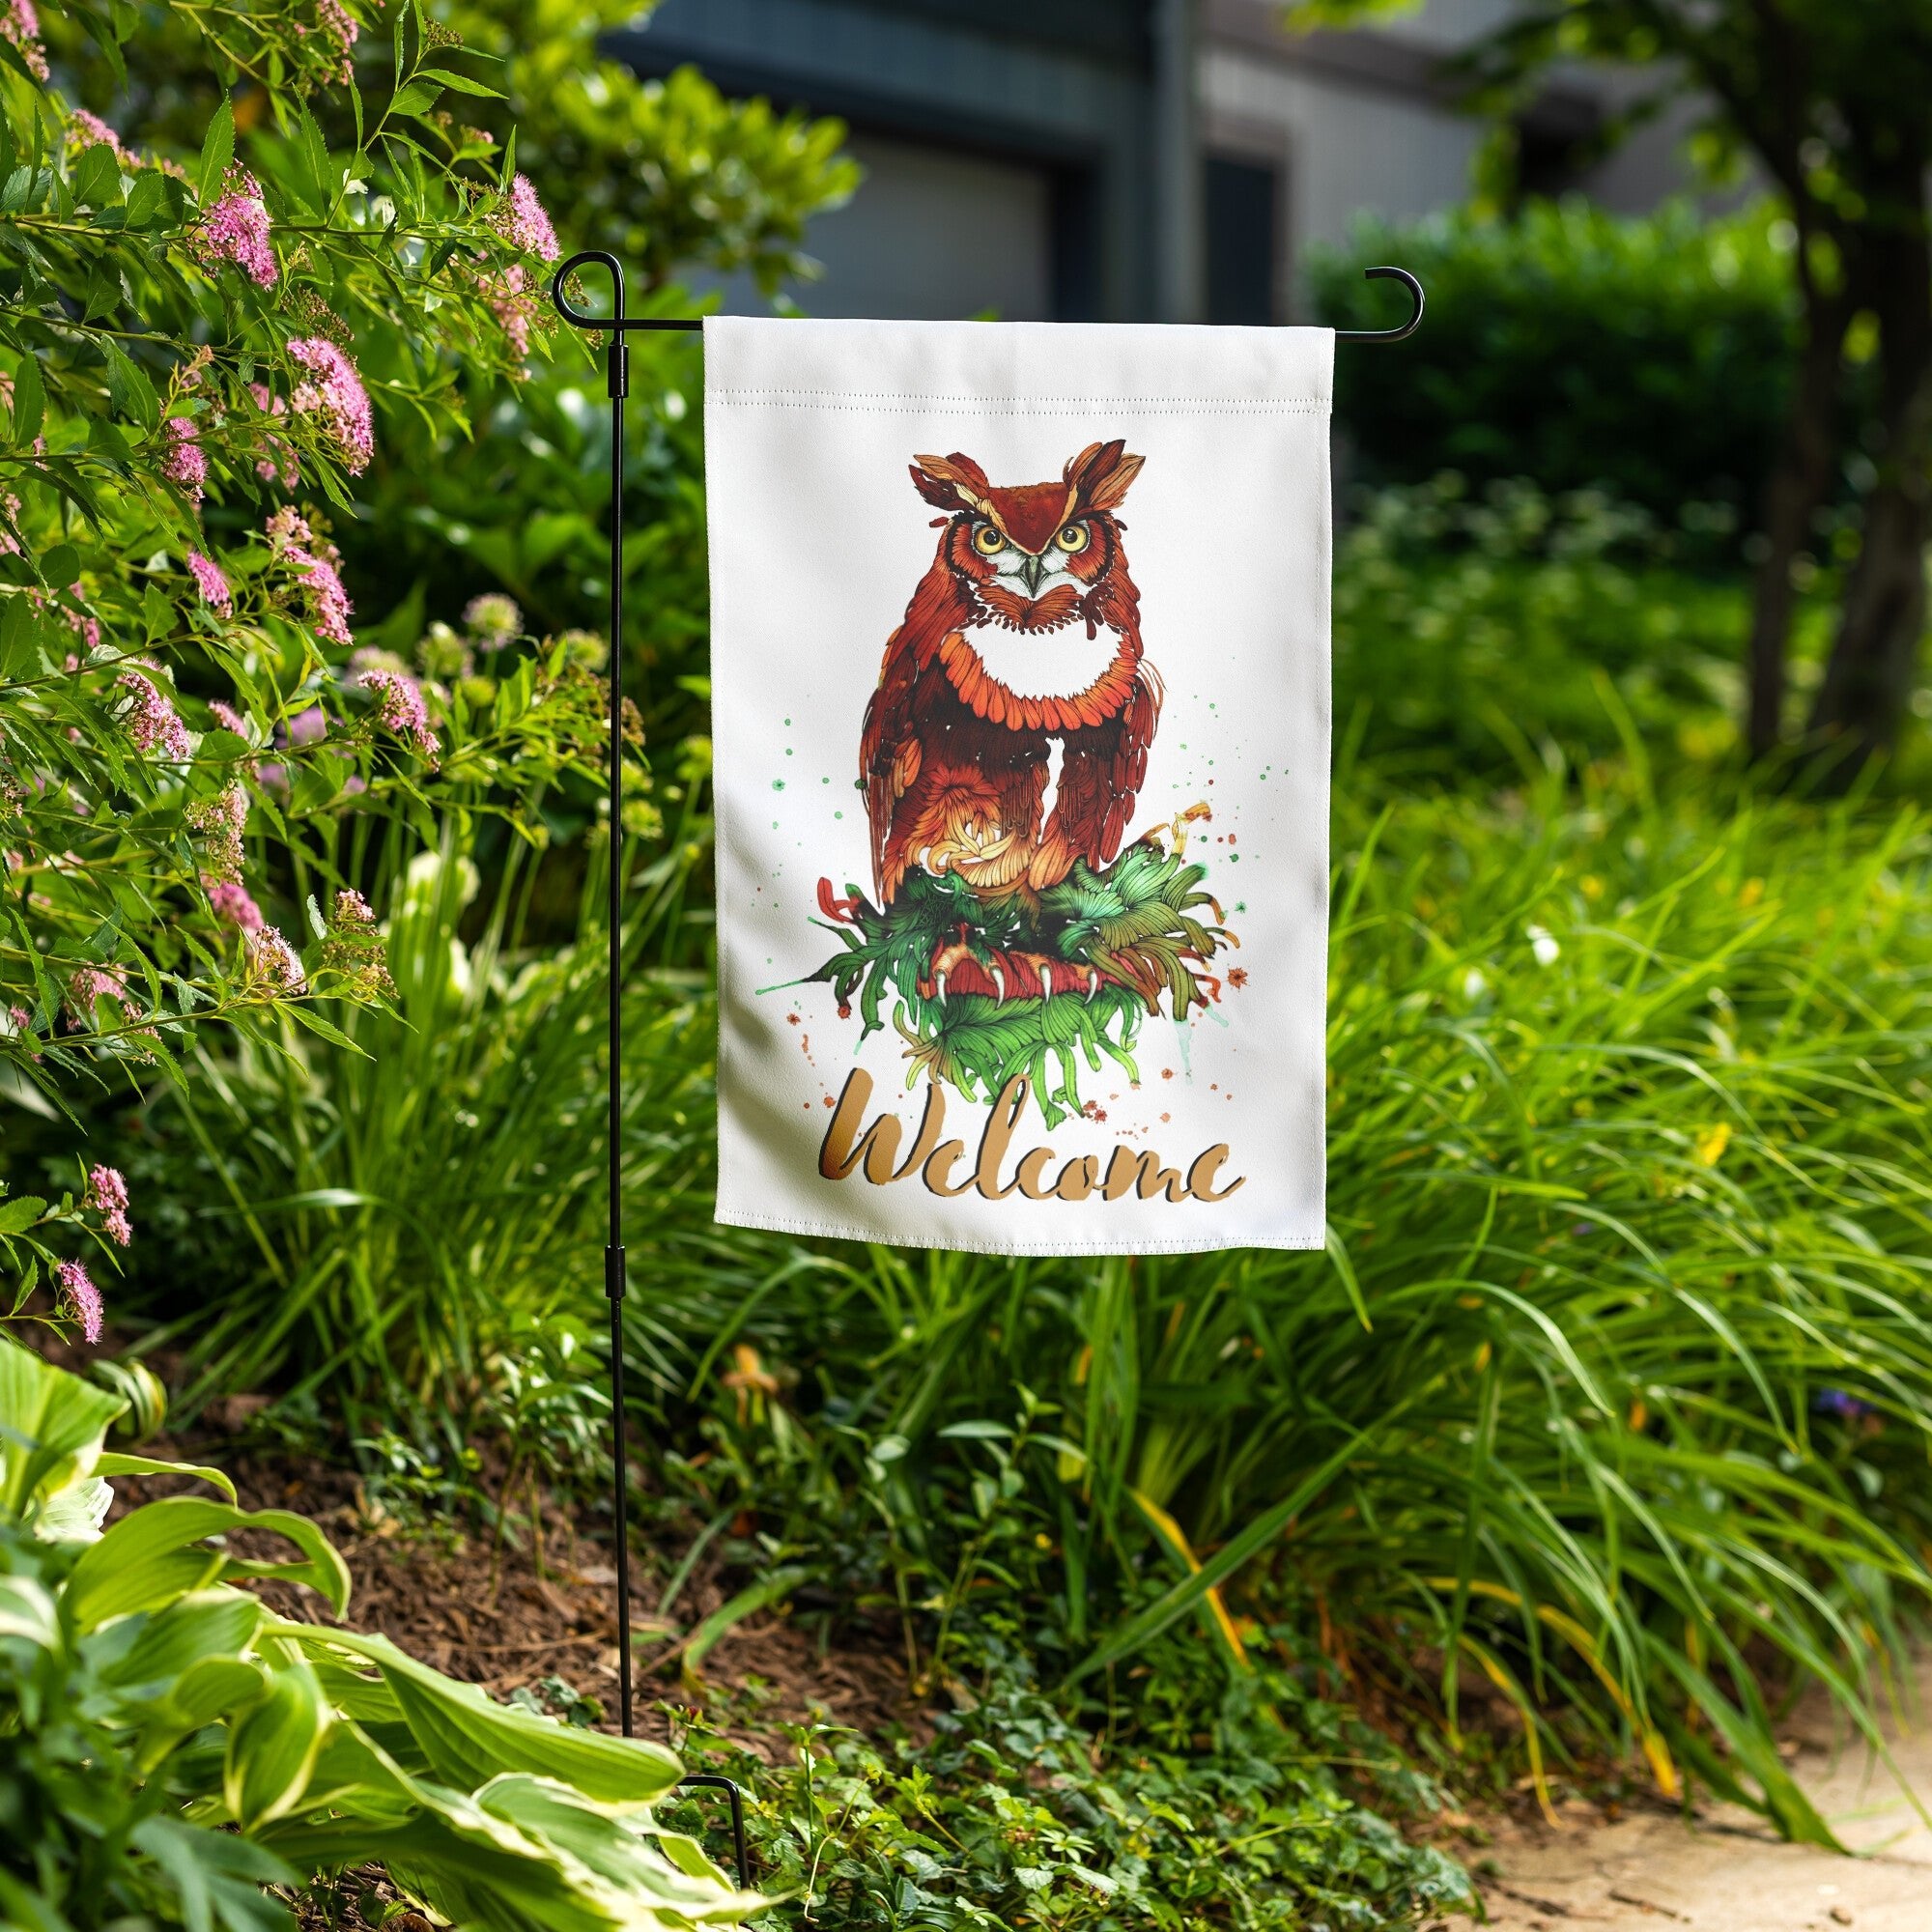 Welcome Owl Garden Banner in yard